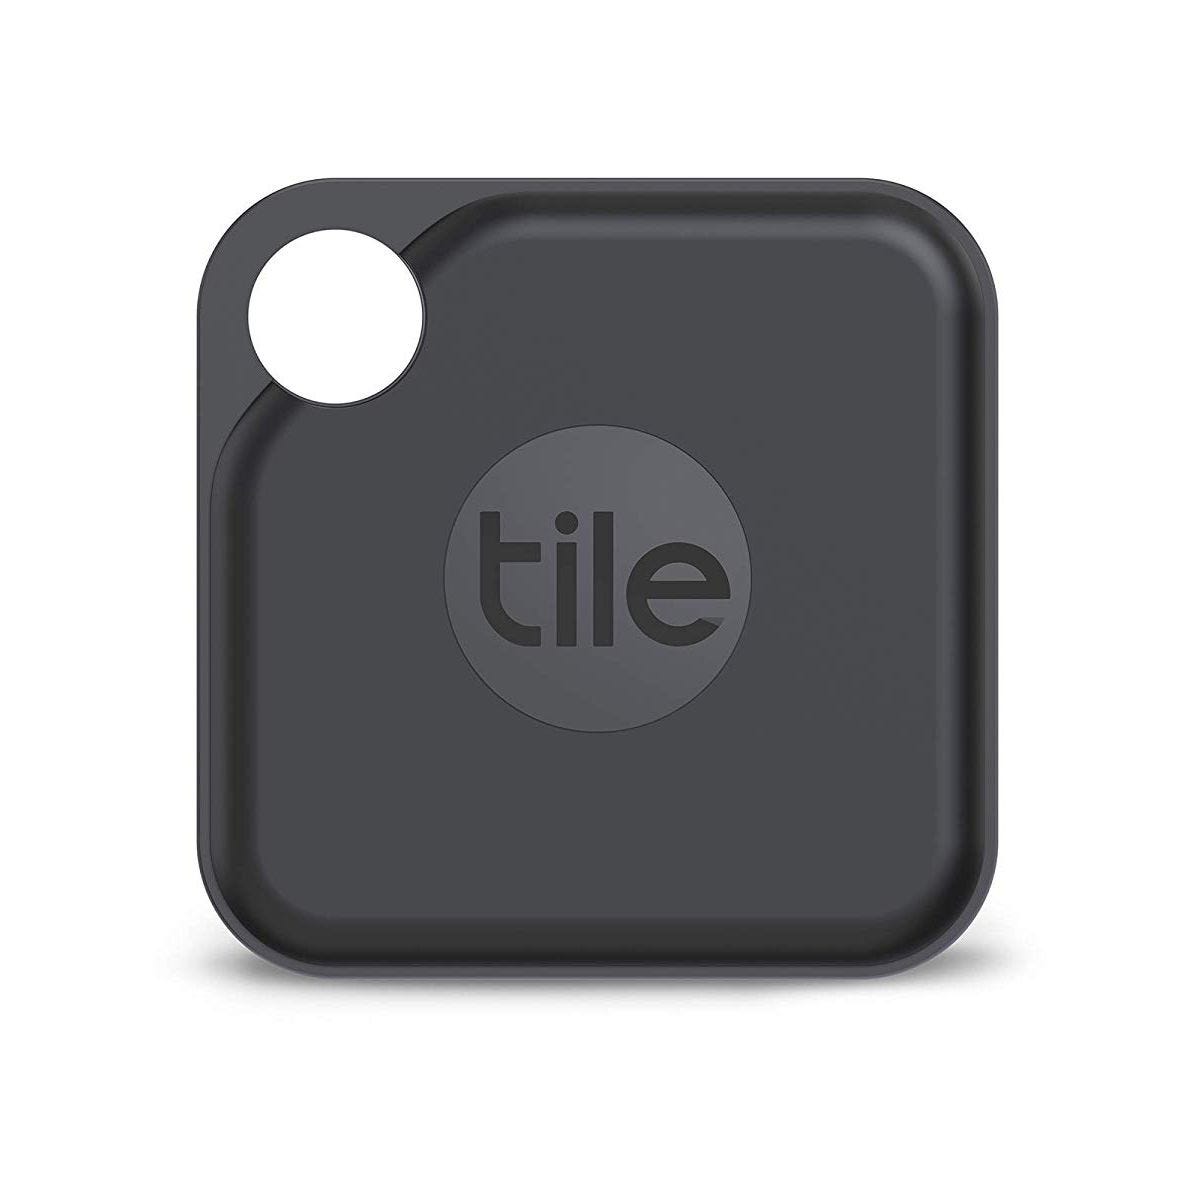 Tracker bluetooth TILE Pro 2